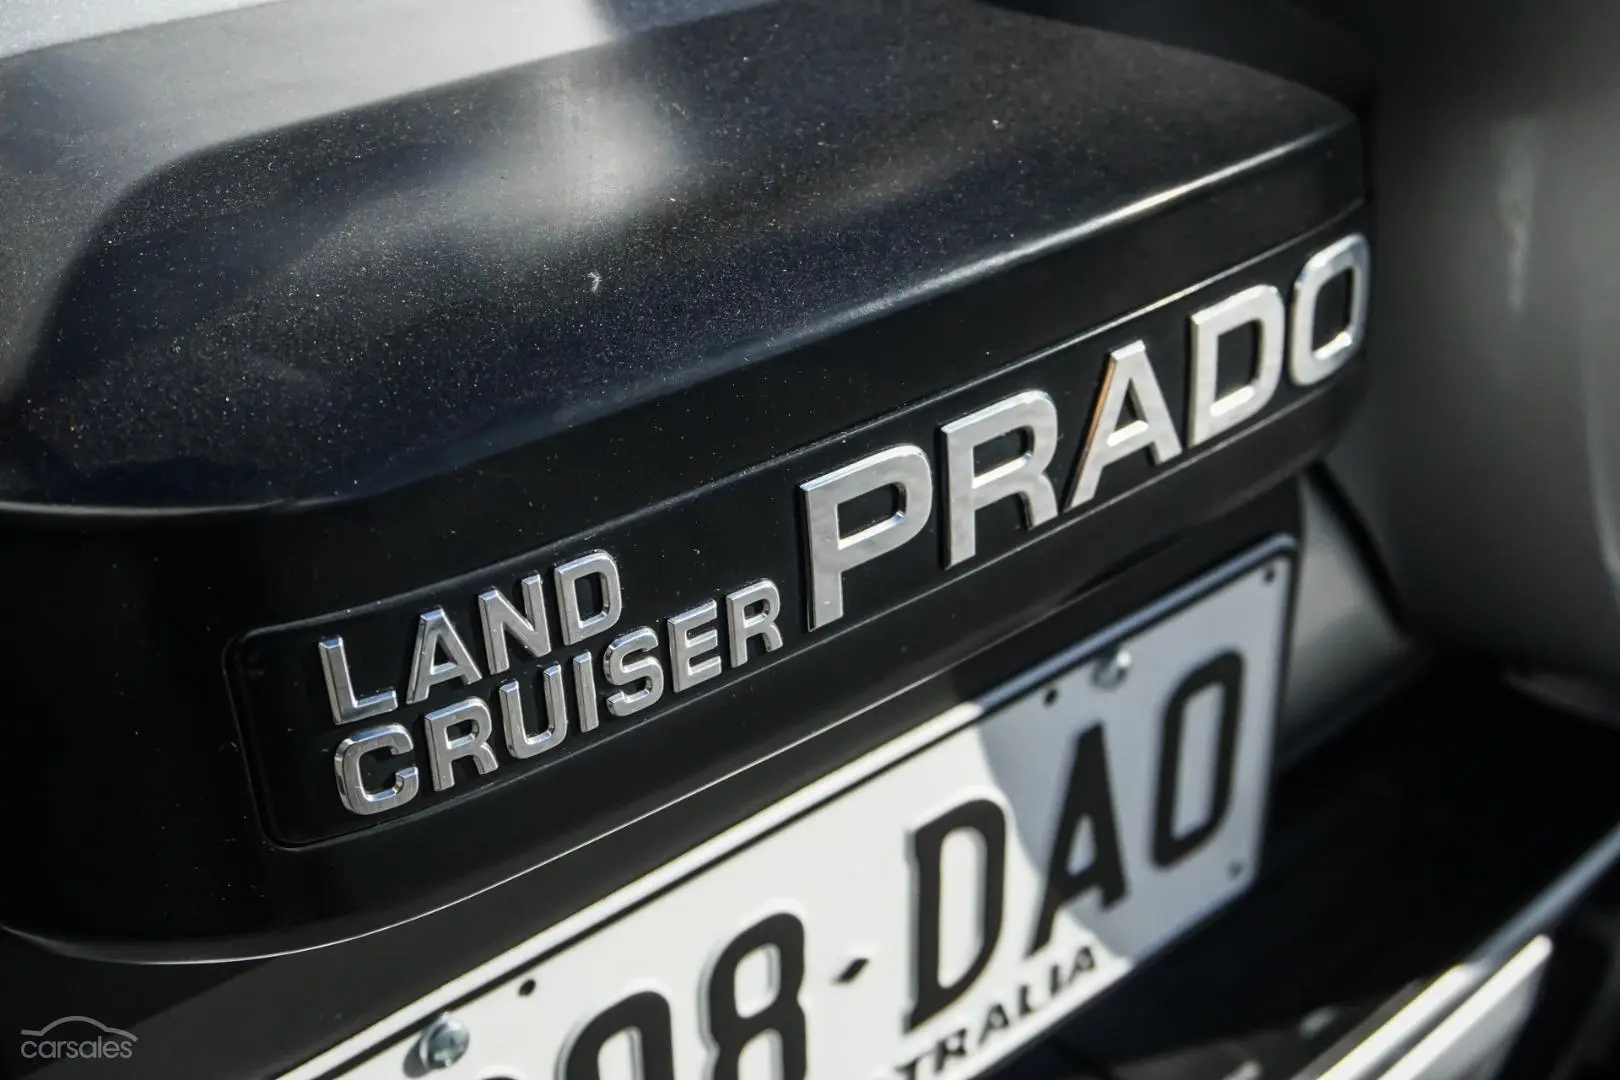 2019 Toyota Landcruiser Prado Image 15